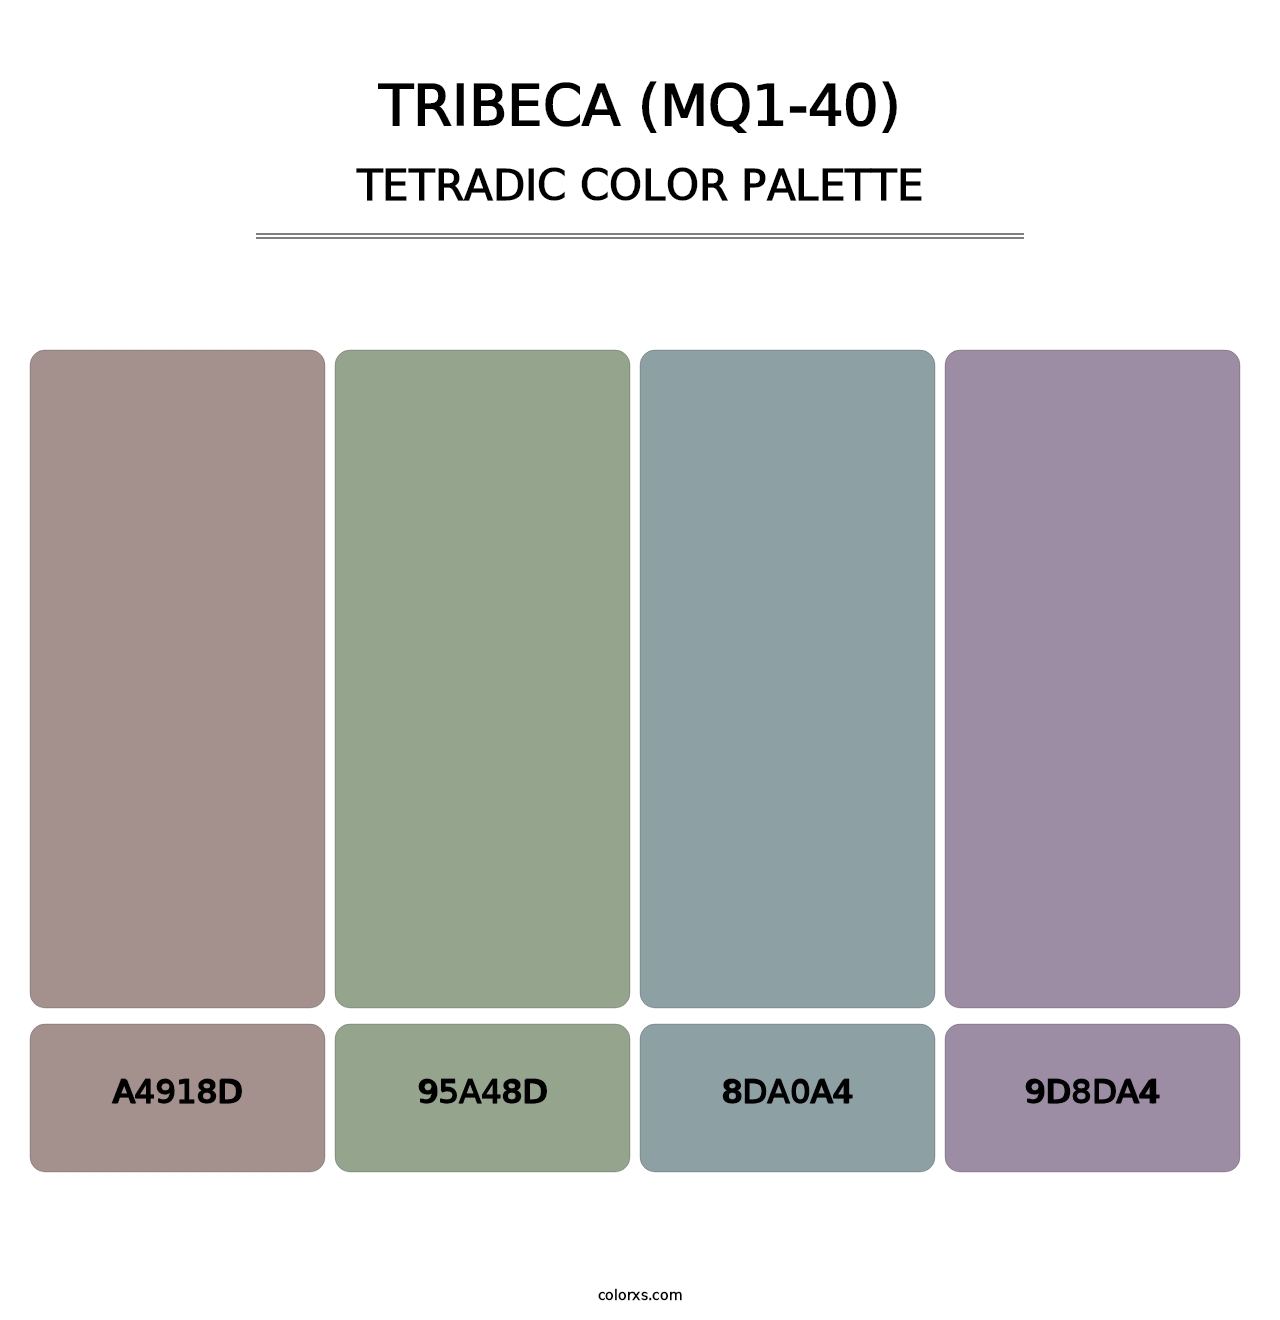 Tribeca (MQ1-40) - Tetradic Color Palette